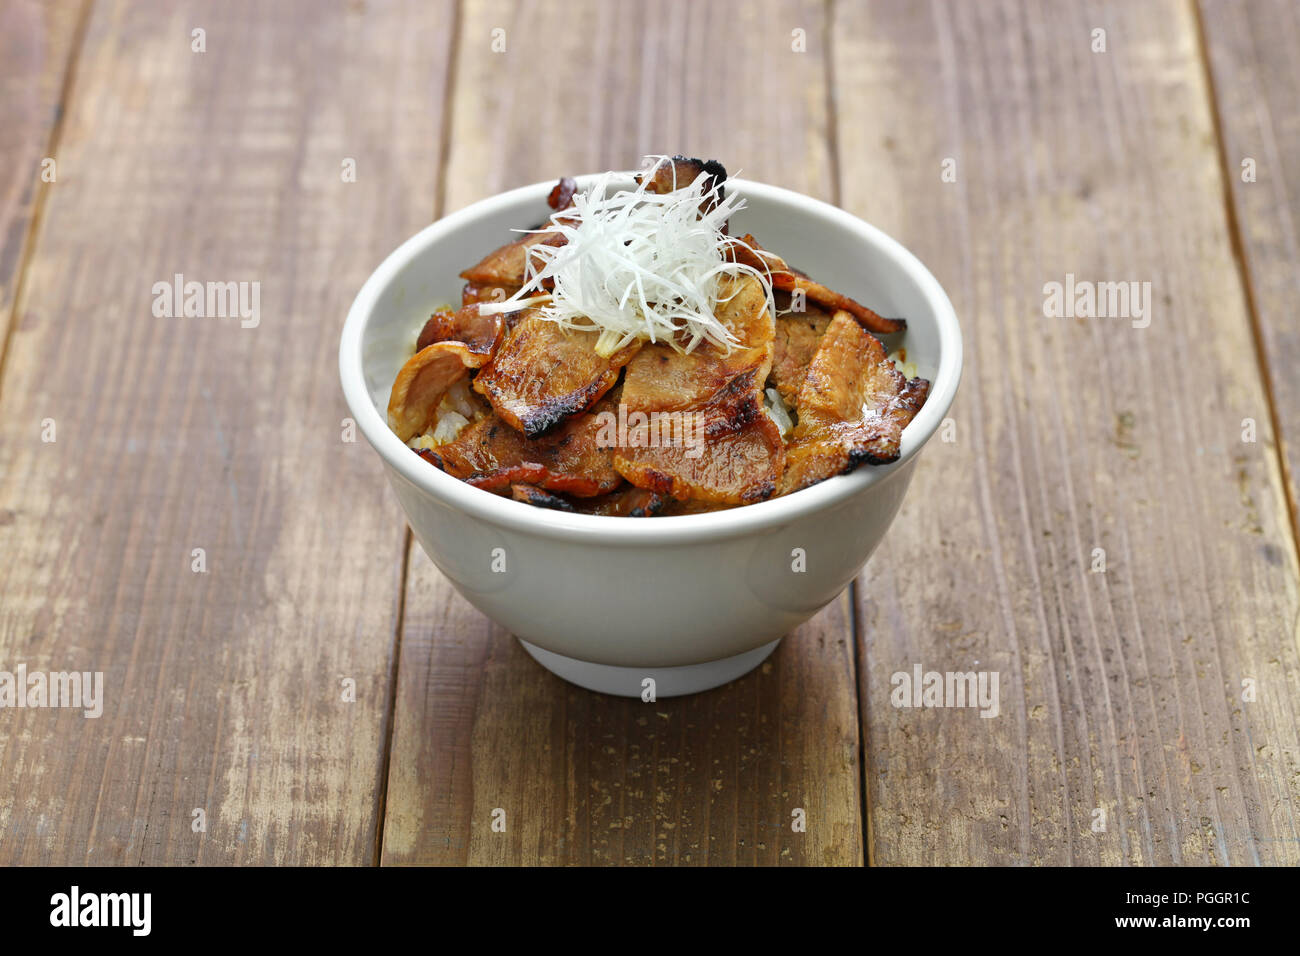 Pork Belly Rice Bowl Recipe (Butadon)